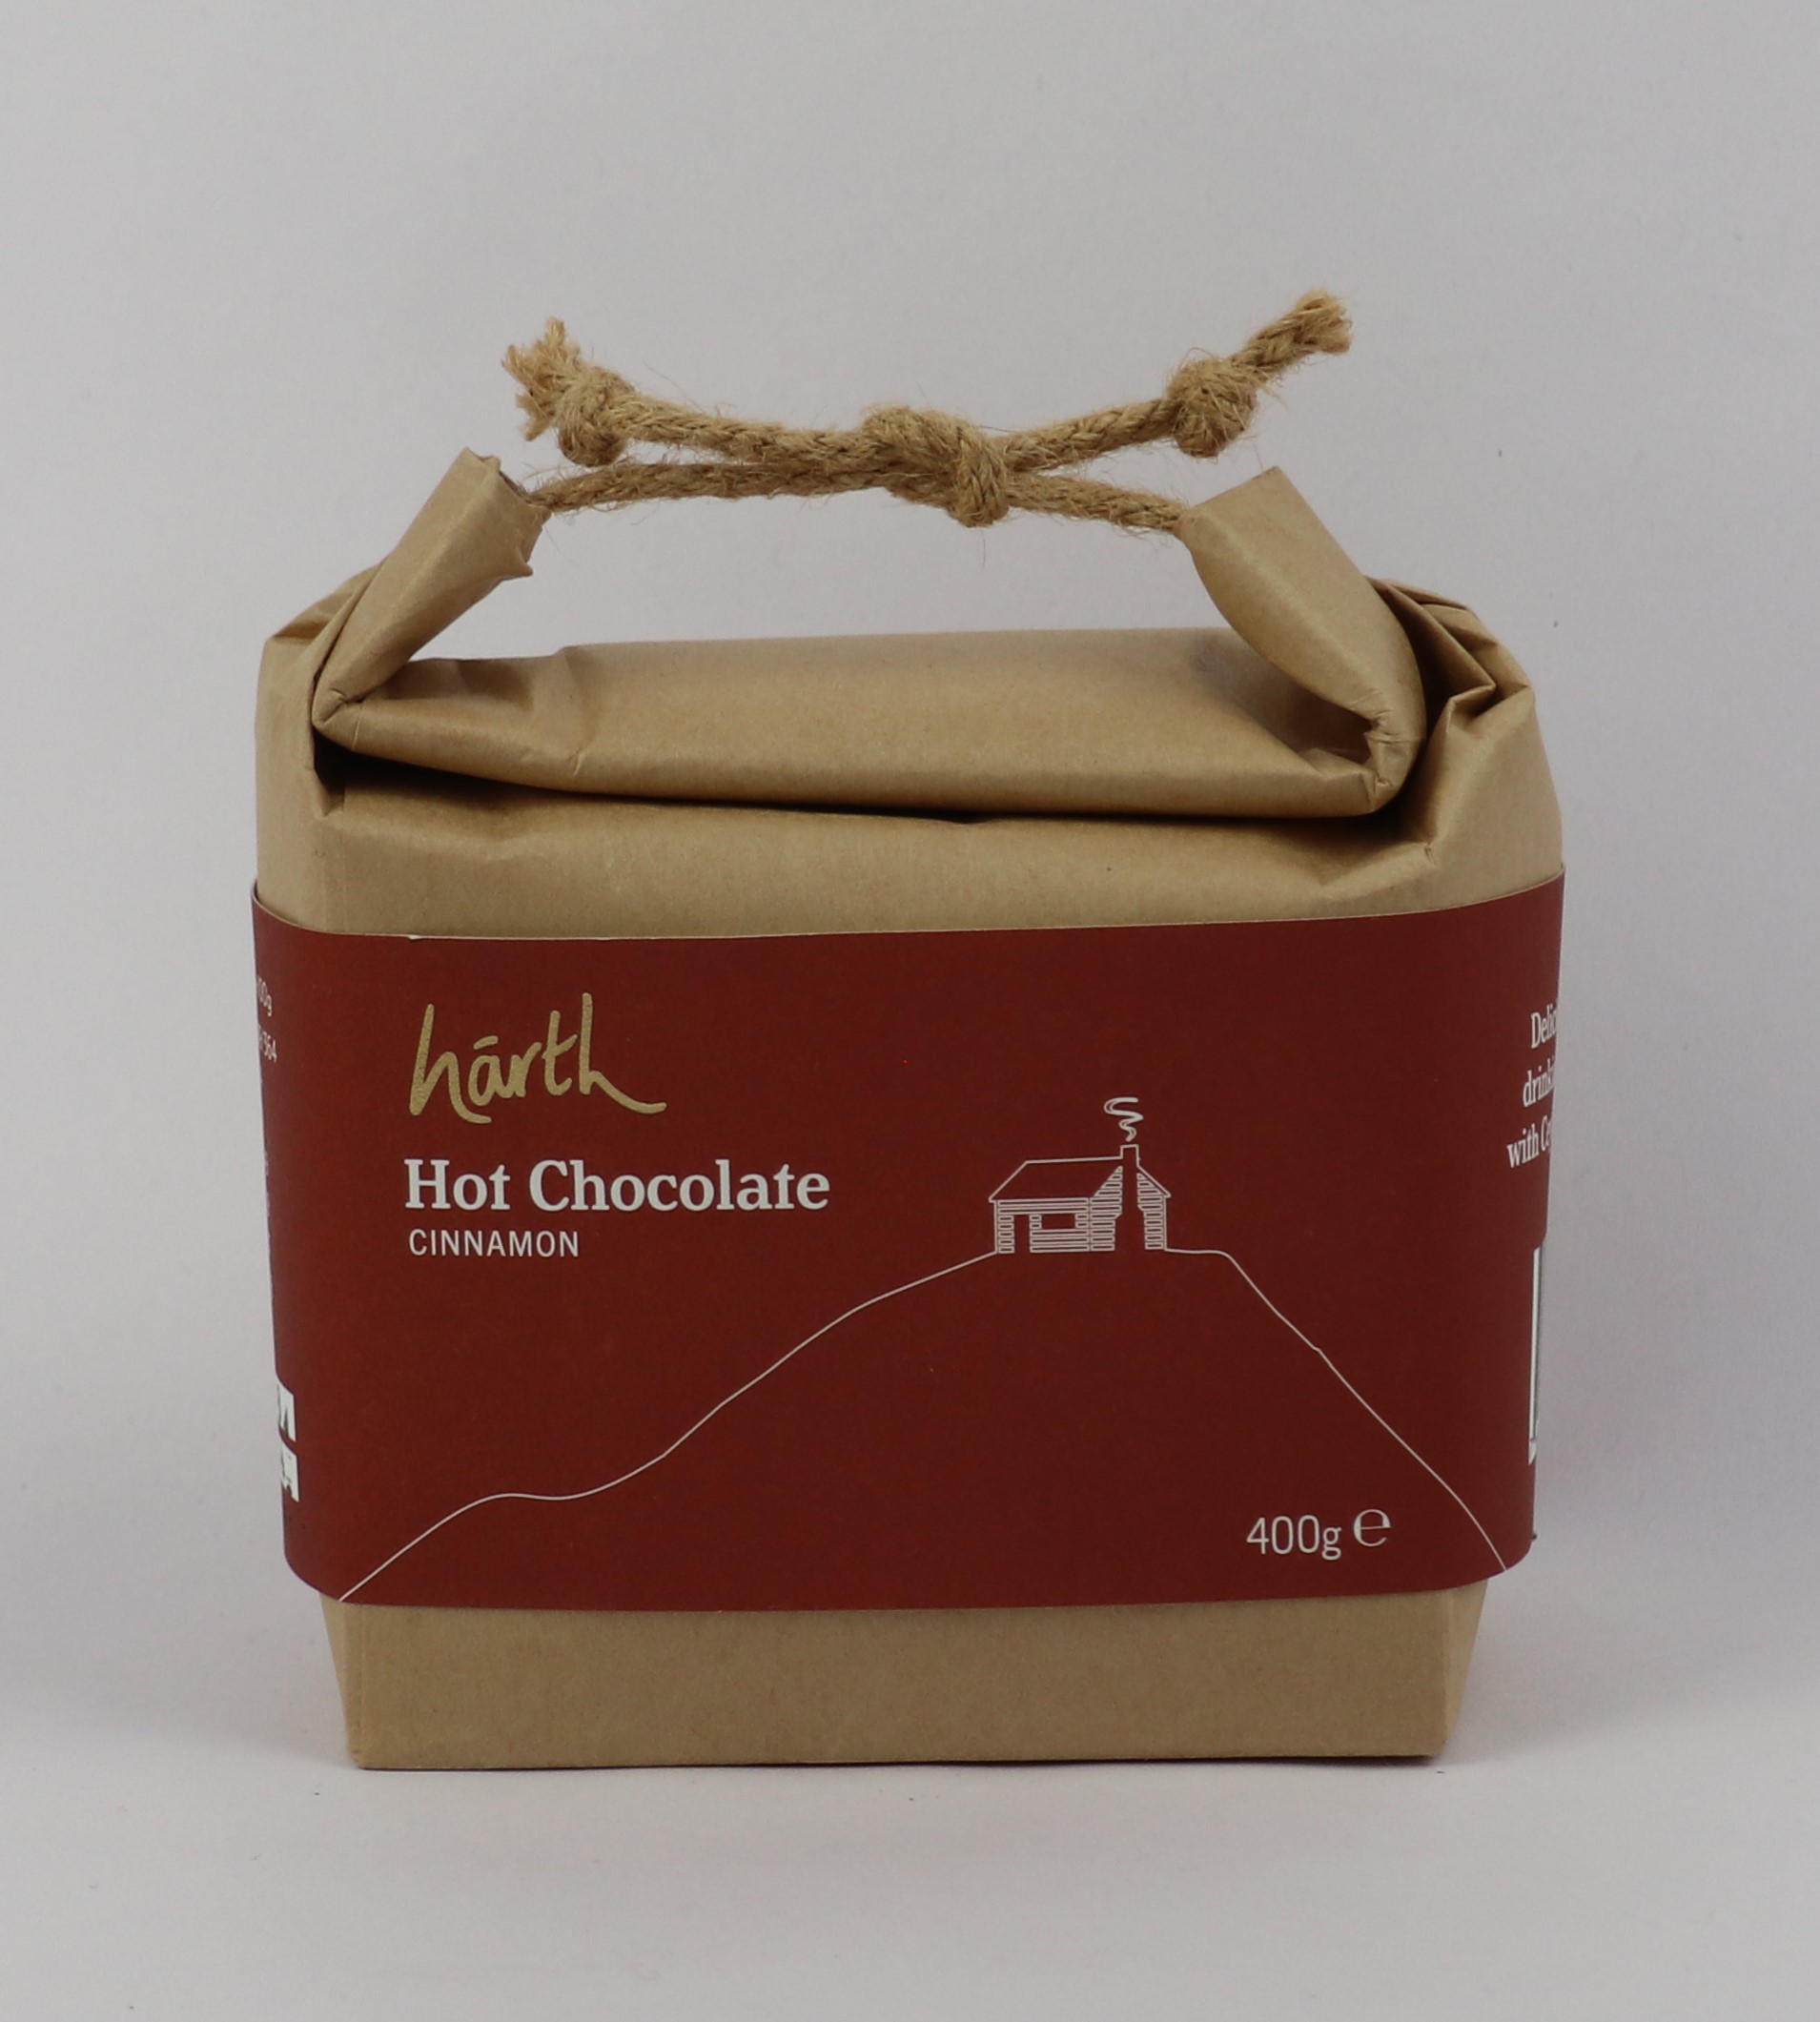 Harth Artisan Hot Chocolate - Cinnamon